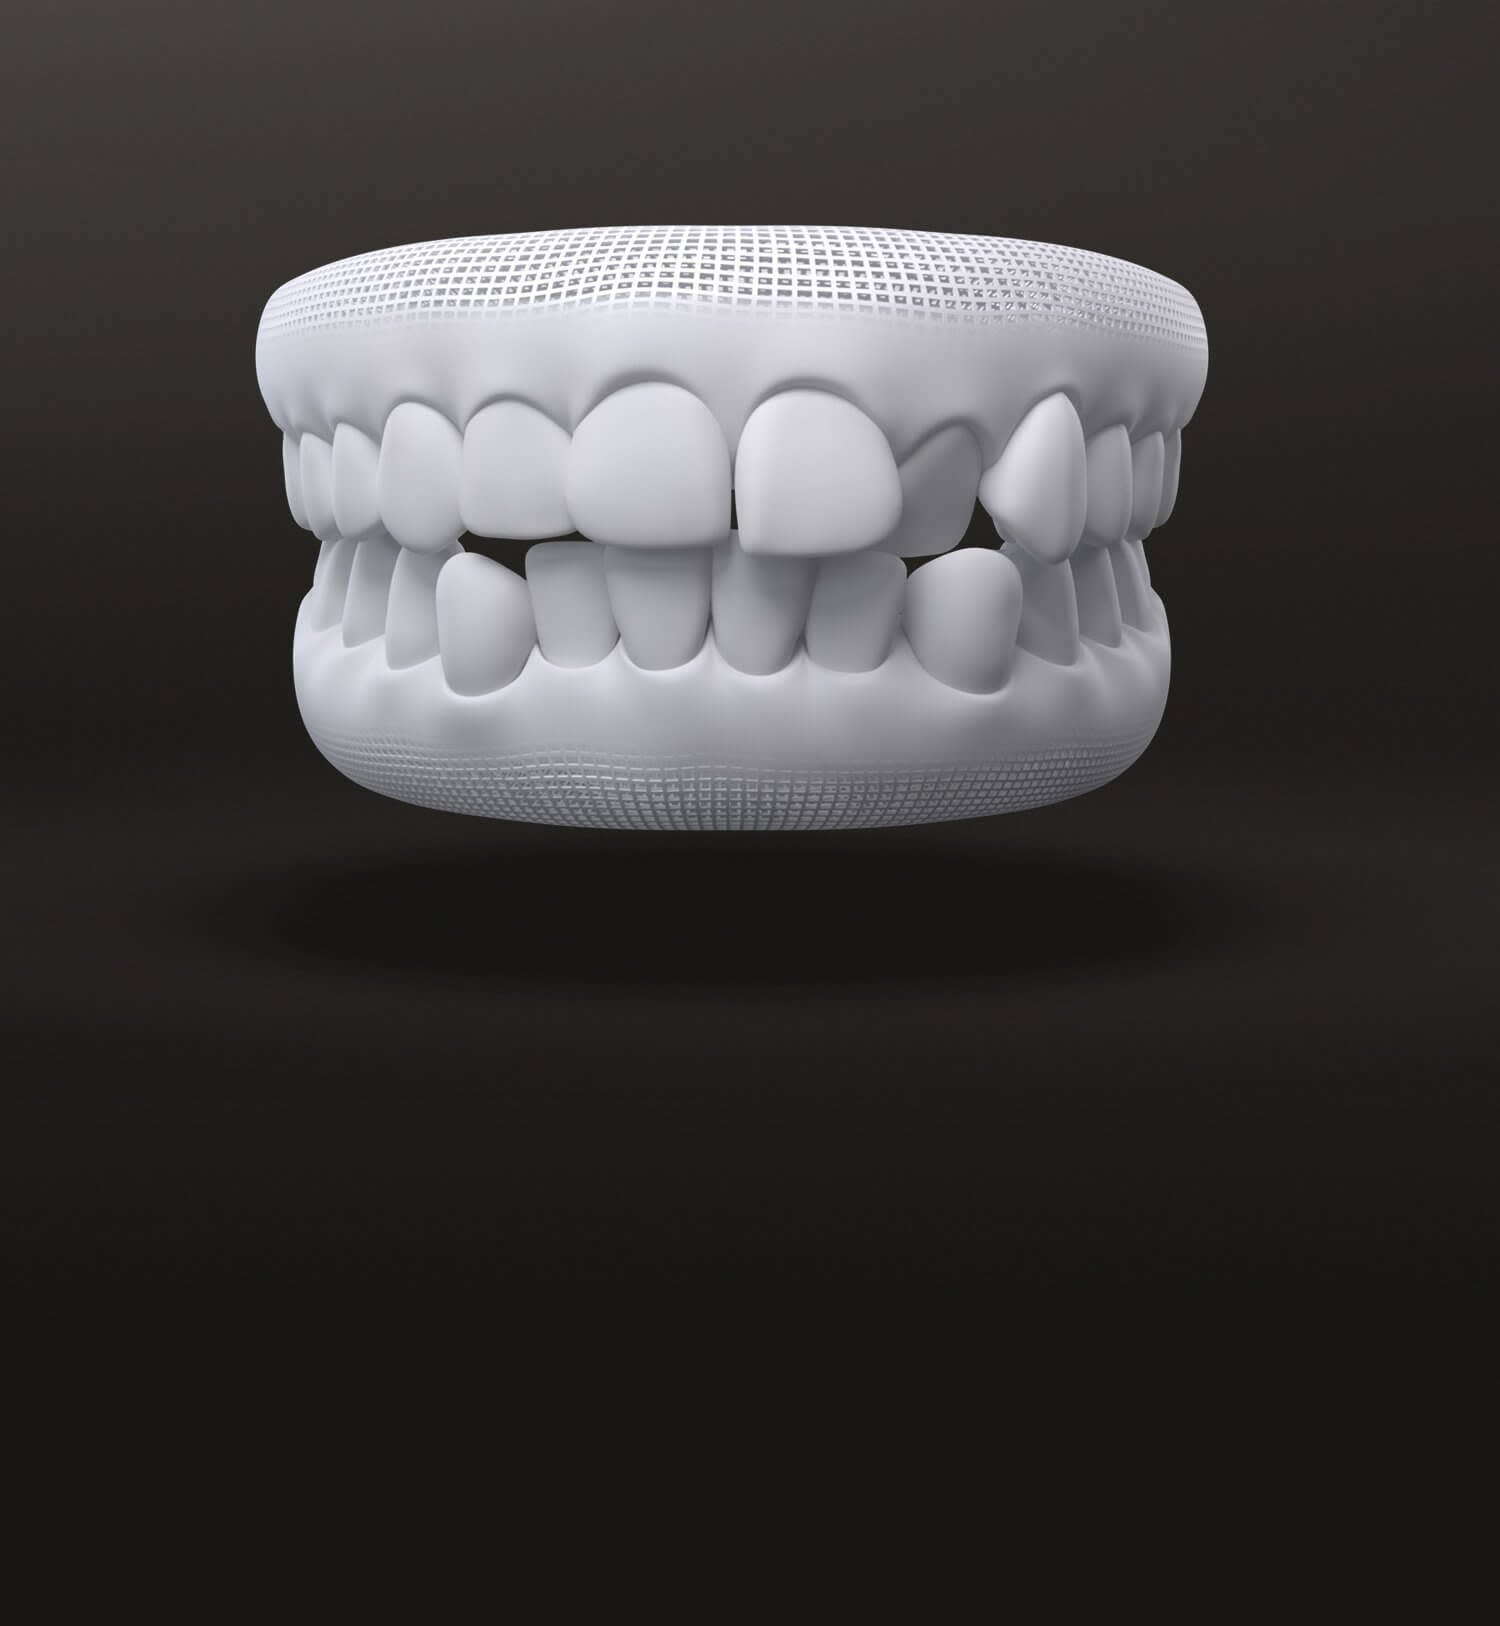 Straight teeth 3d model - Invisalign Europe